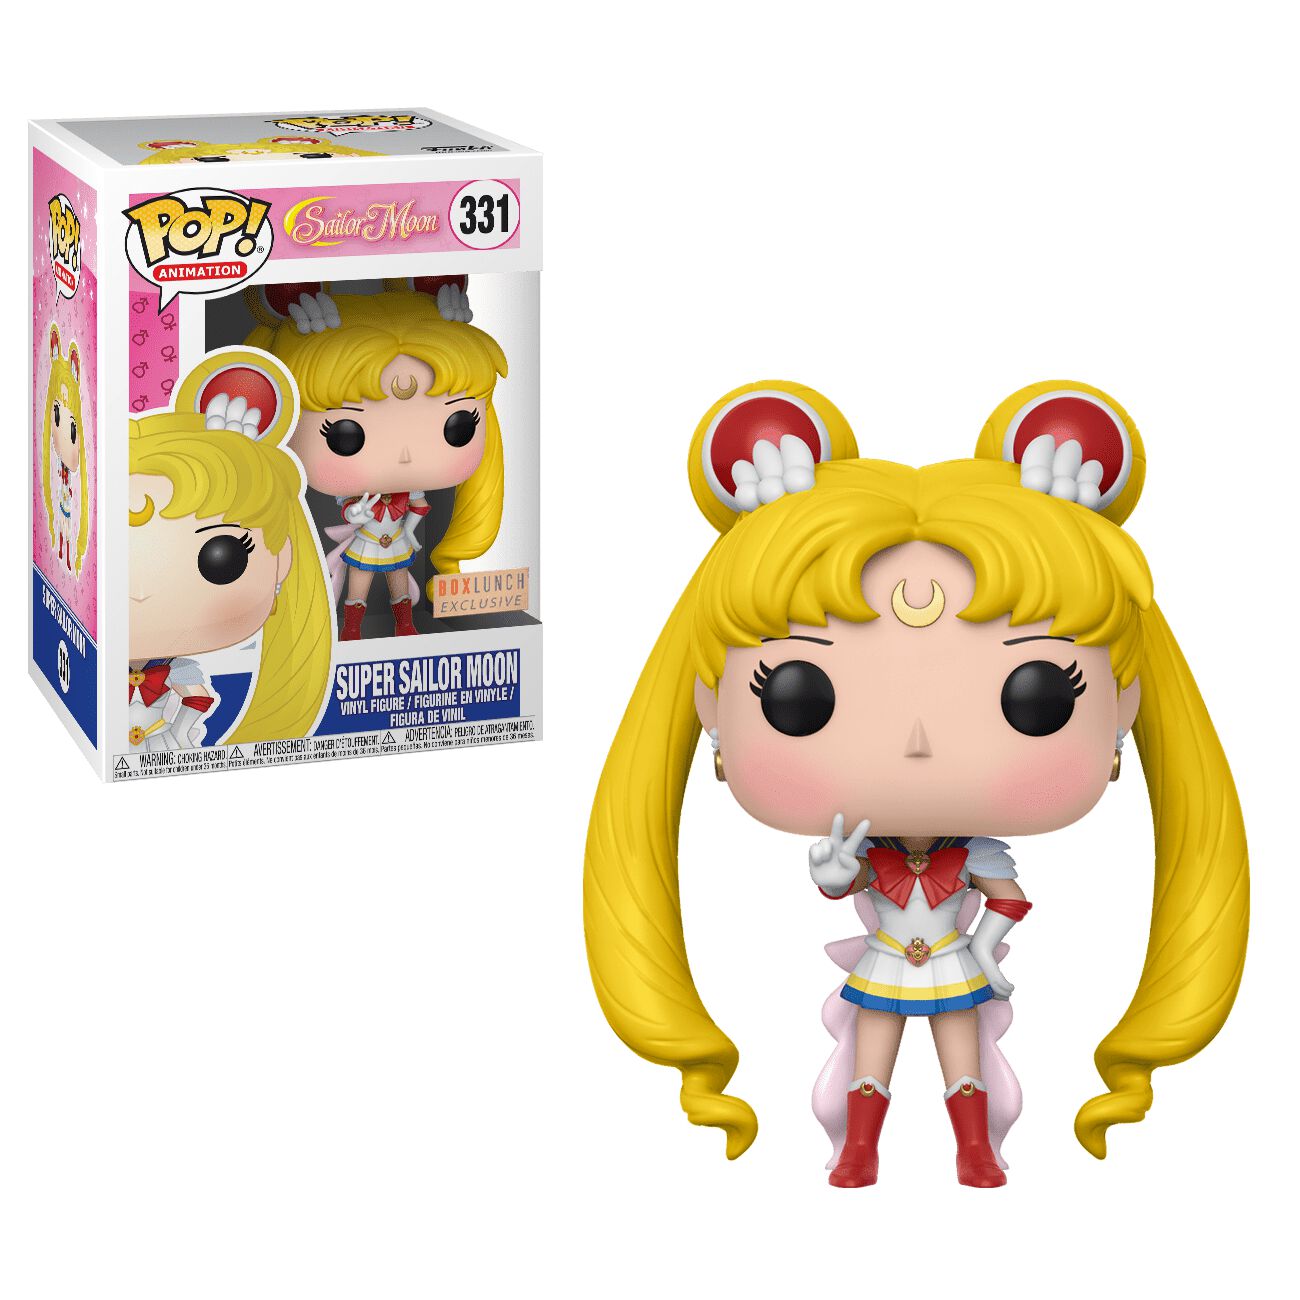 Coming Soon: BoxLunch Exclusive Super Sailor Moon Pop!